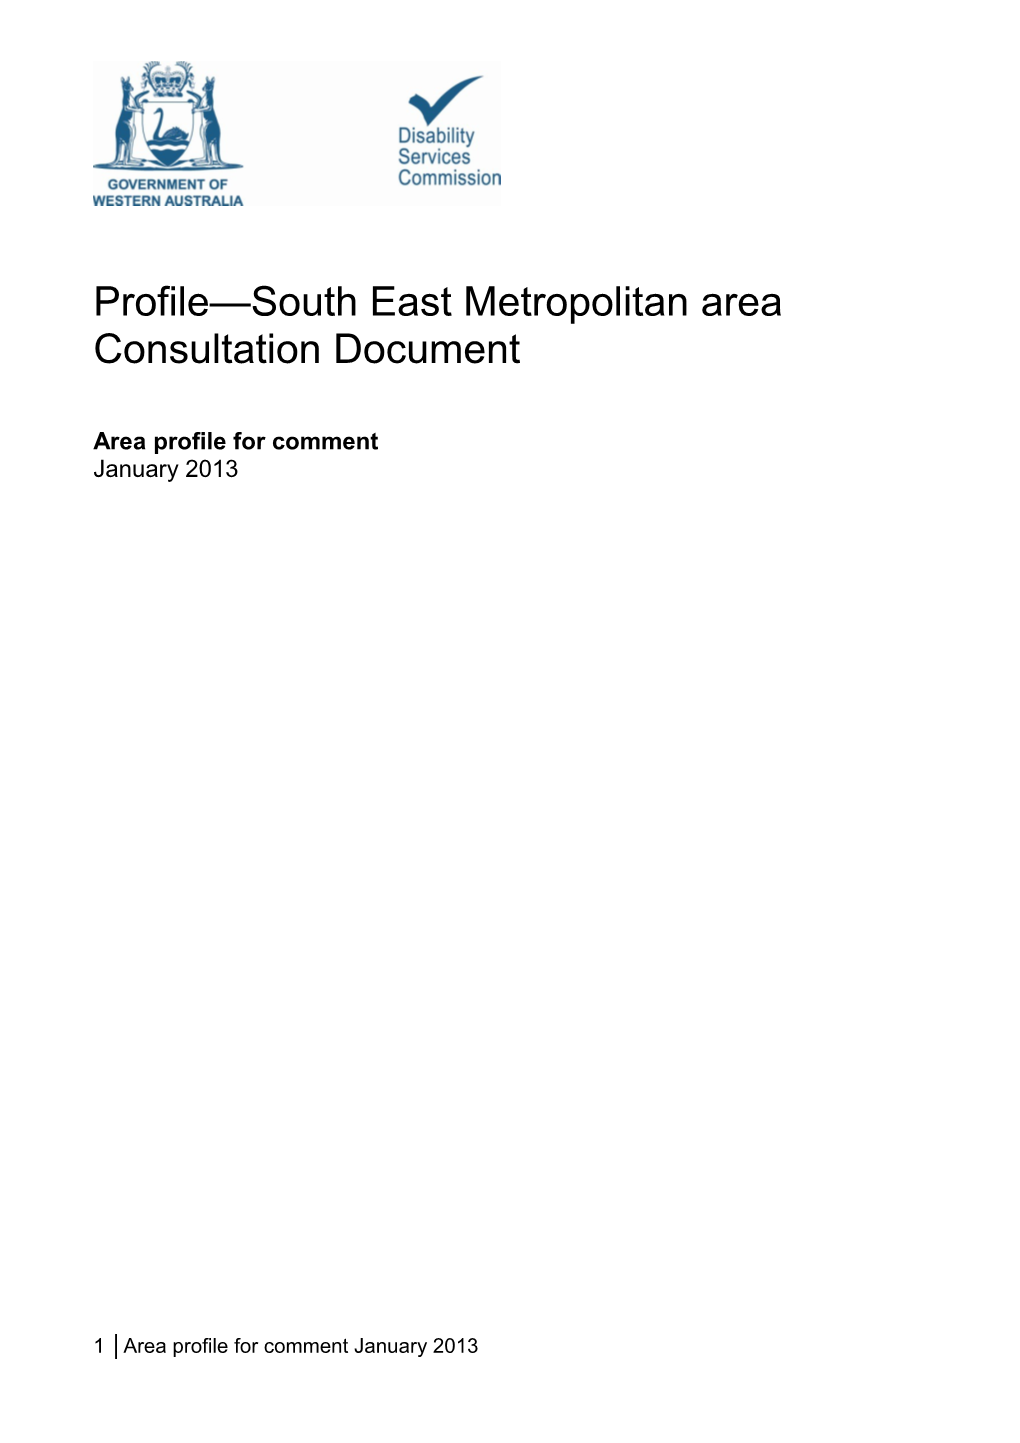 South East Metropolitan Area Profile Consultation Document - Accessible